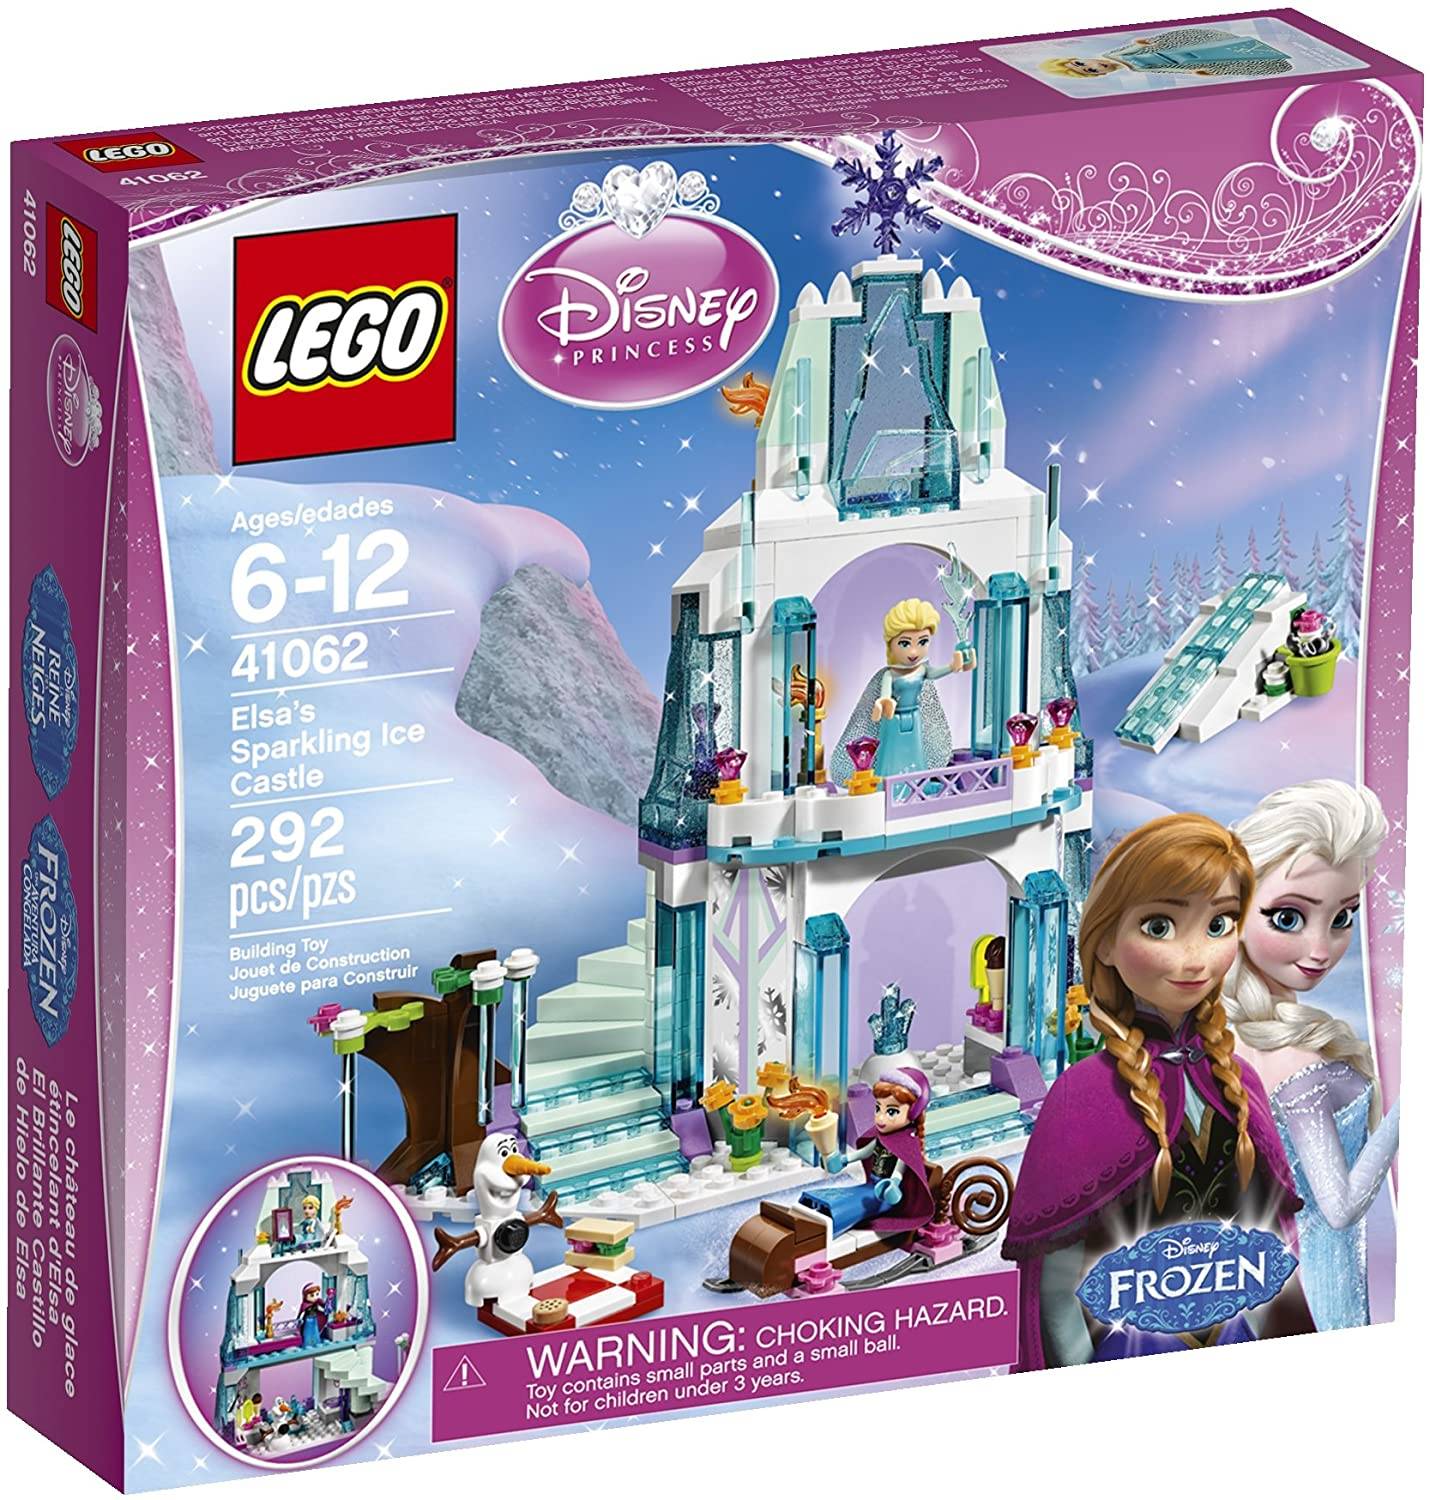 LEGO Elsa’s Sparkling Ice Castle 